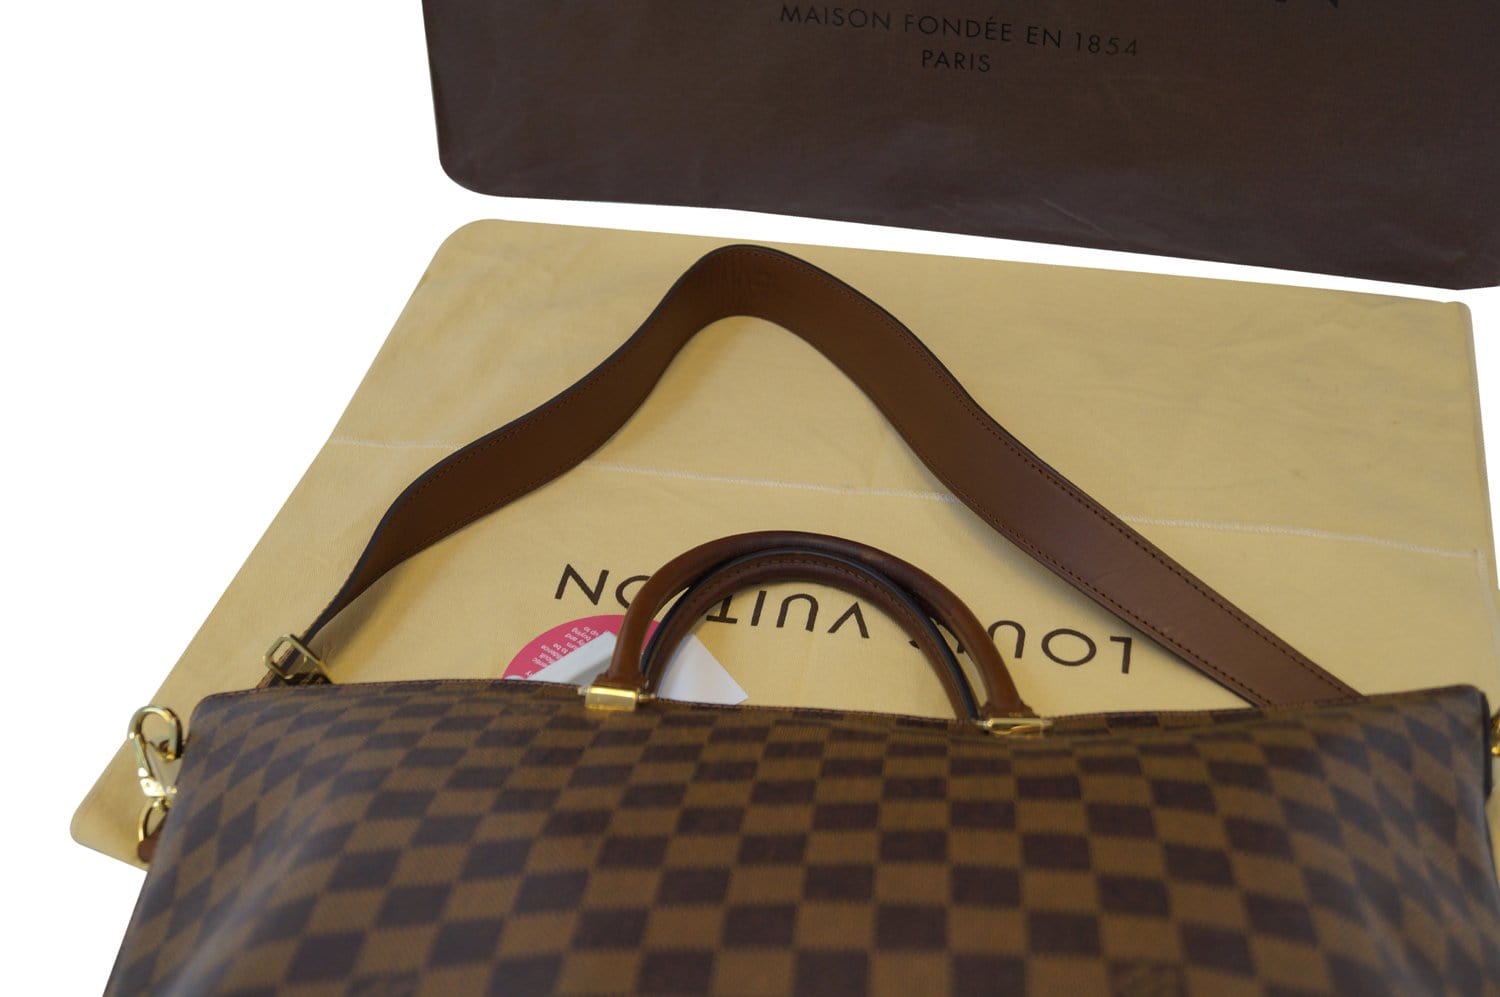 Louis Vuitton Damier Ebene Canvas Belmont Bag at 1stDibs